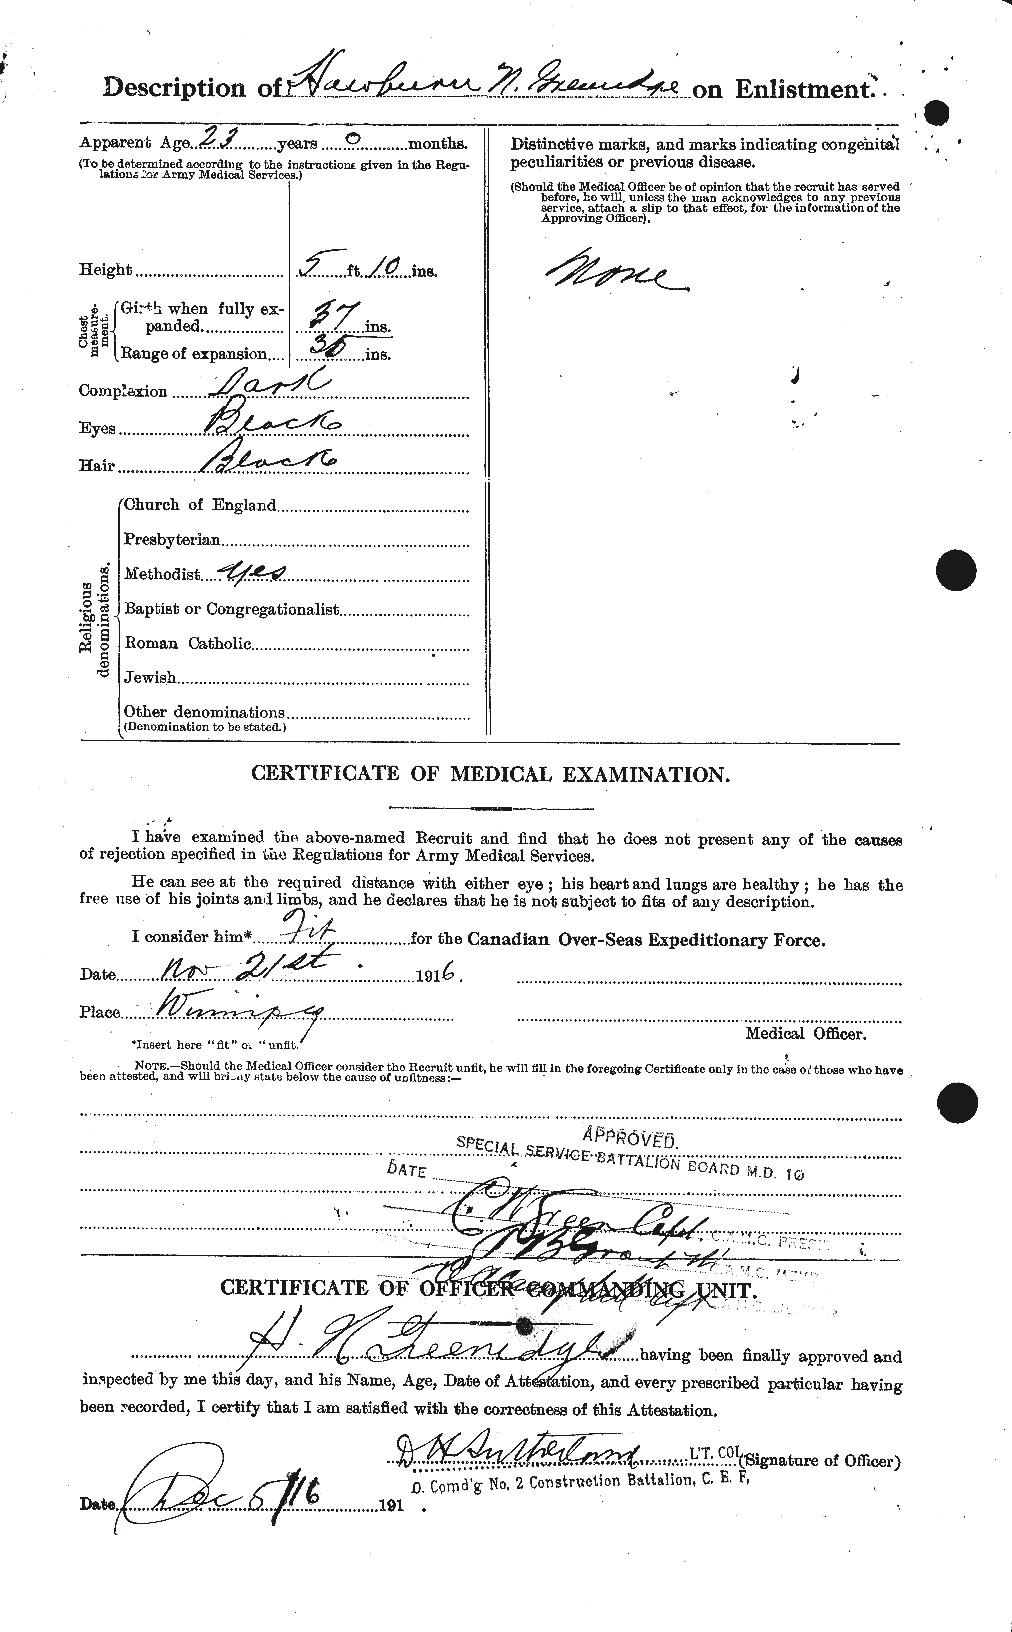 Attestation record: Hewburn Nathaniel Greenidge